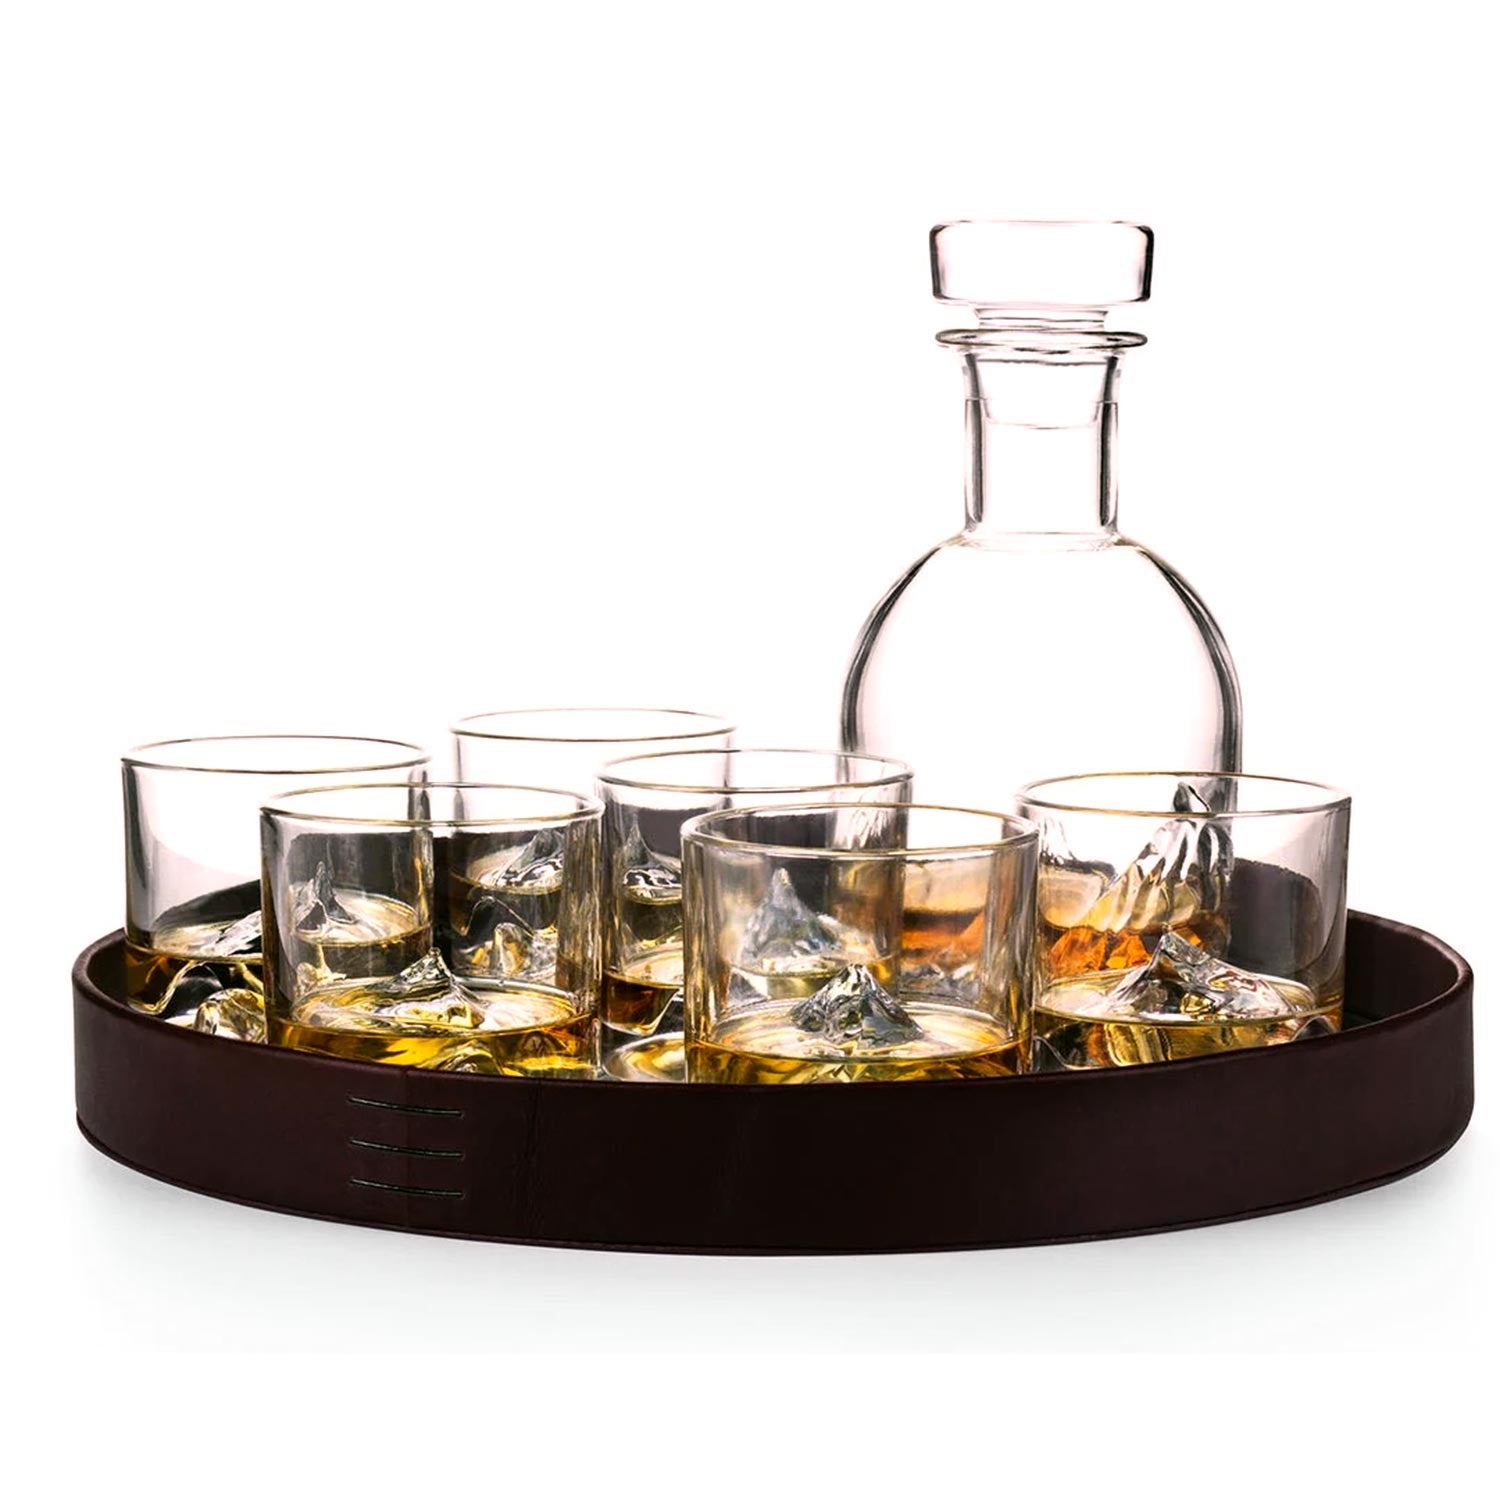 LIITON Everest Luxury Crystal Whiskey Glasses, Decanter, Leather Tray & Coasters Set